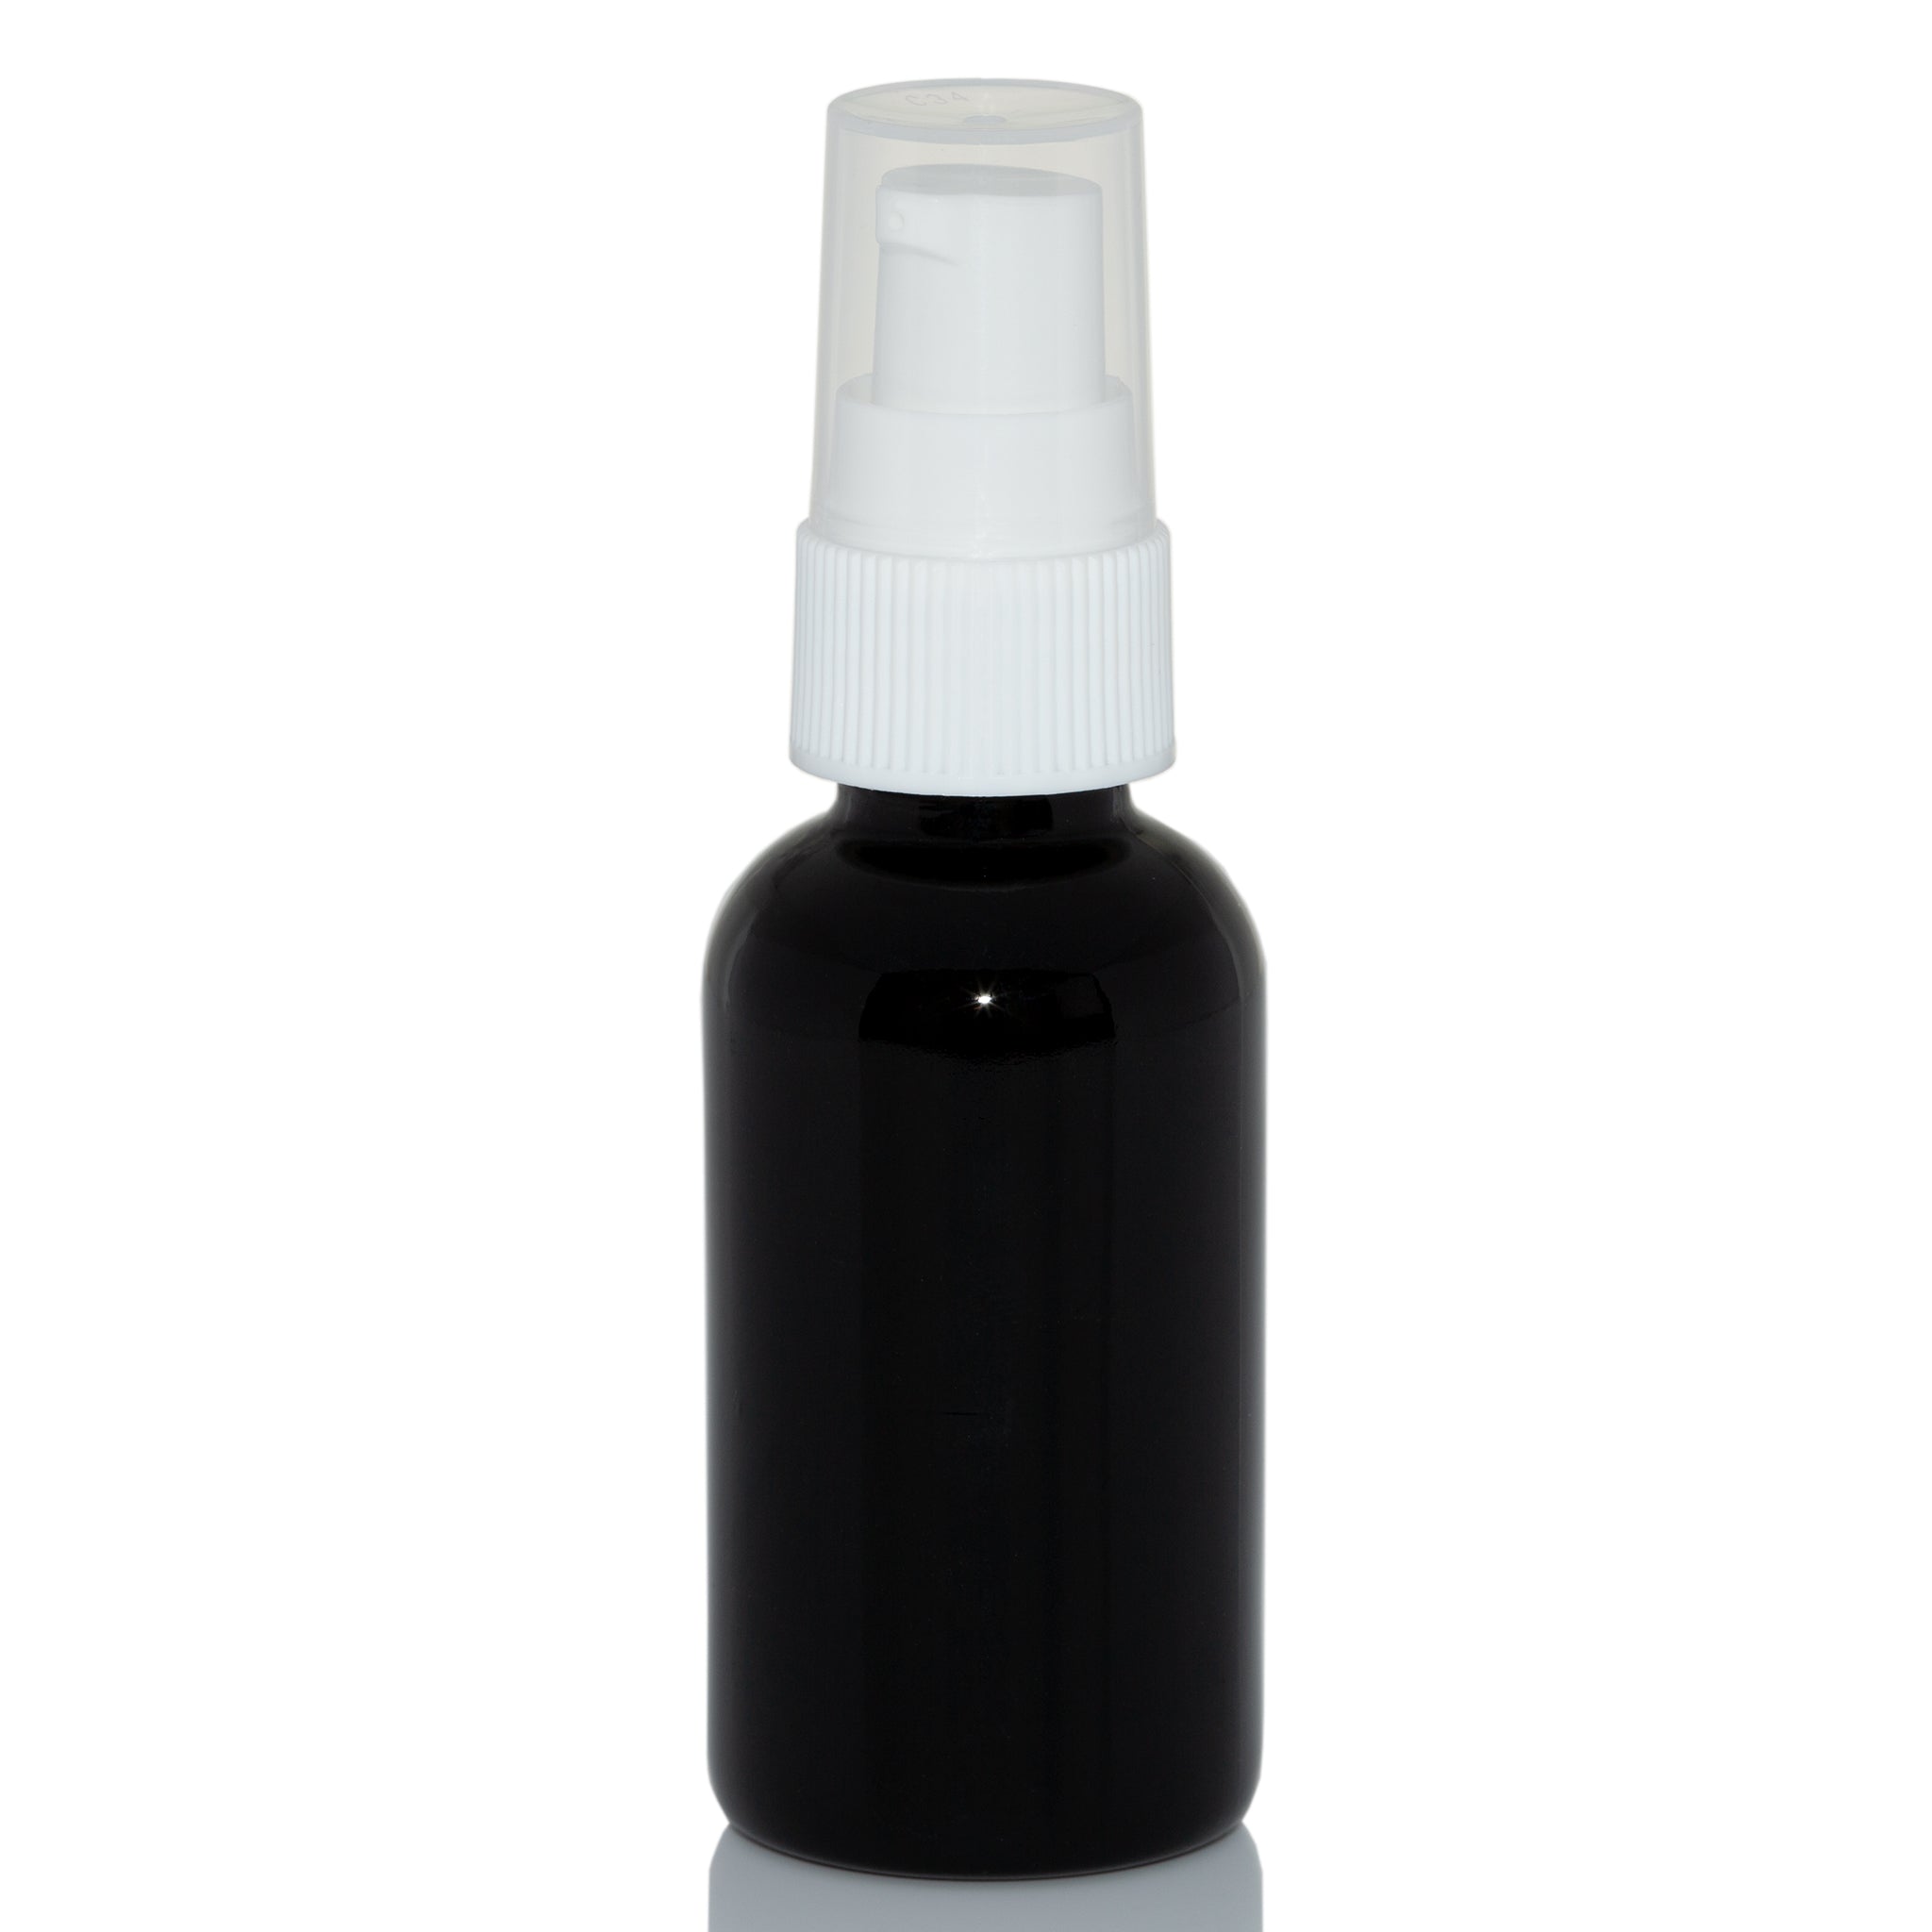 1 oz Black Glass Bottle with 20-400 White Treatment Pump